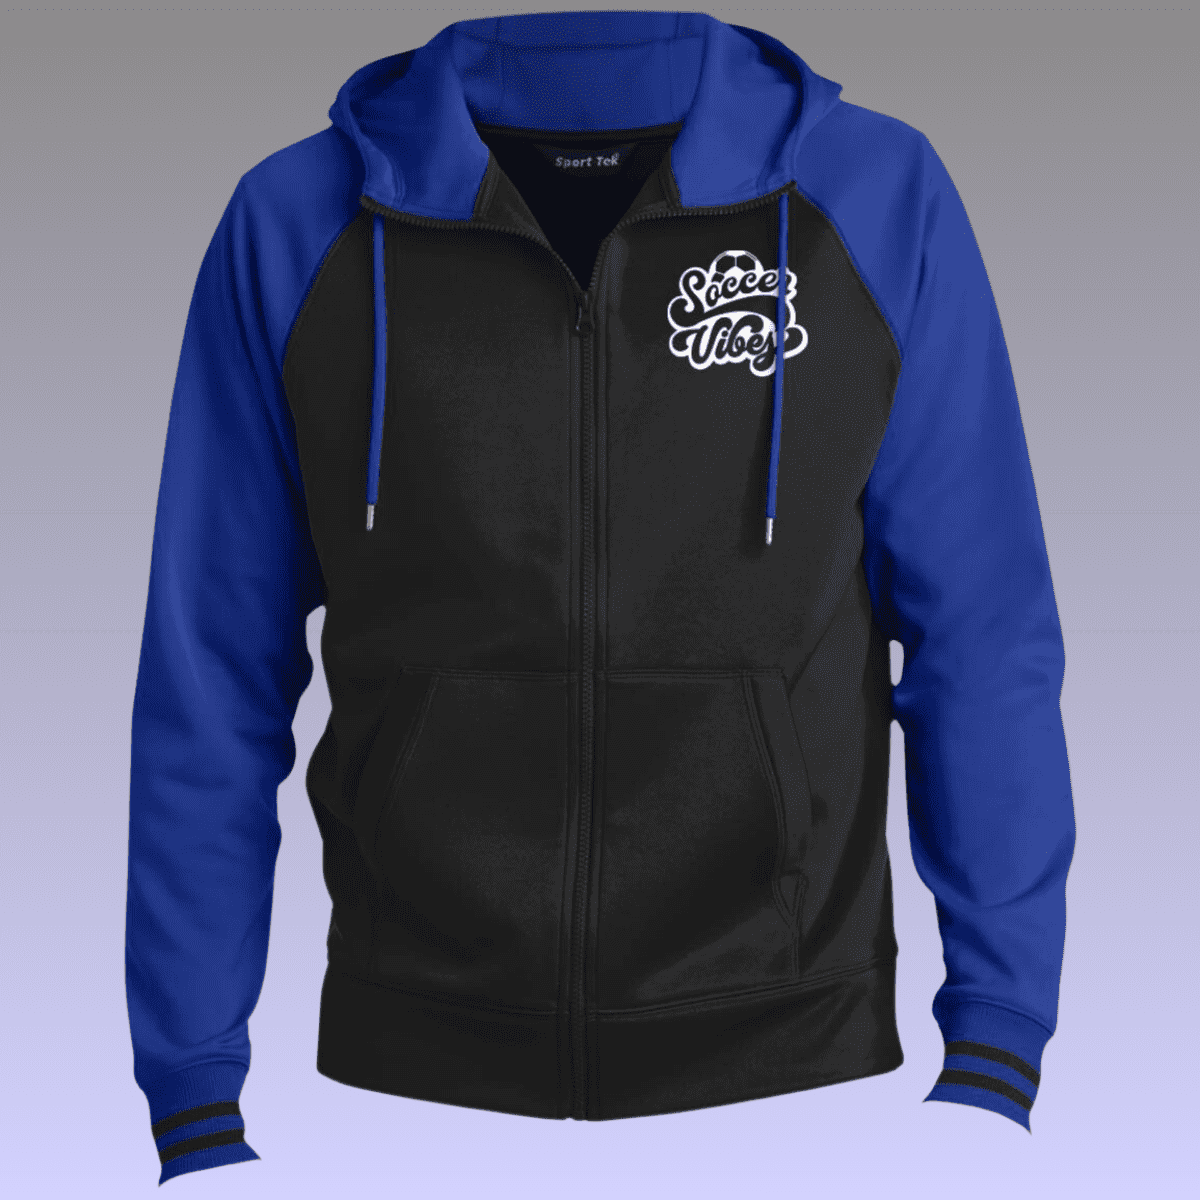 Men's Royal and Black Soccer Vibes Sport-Wick® Full-Zip Hooded Jacket